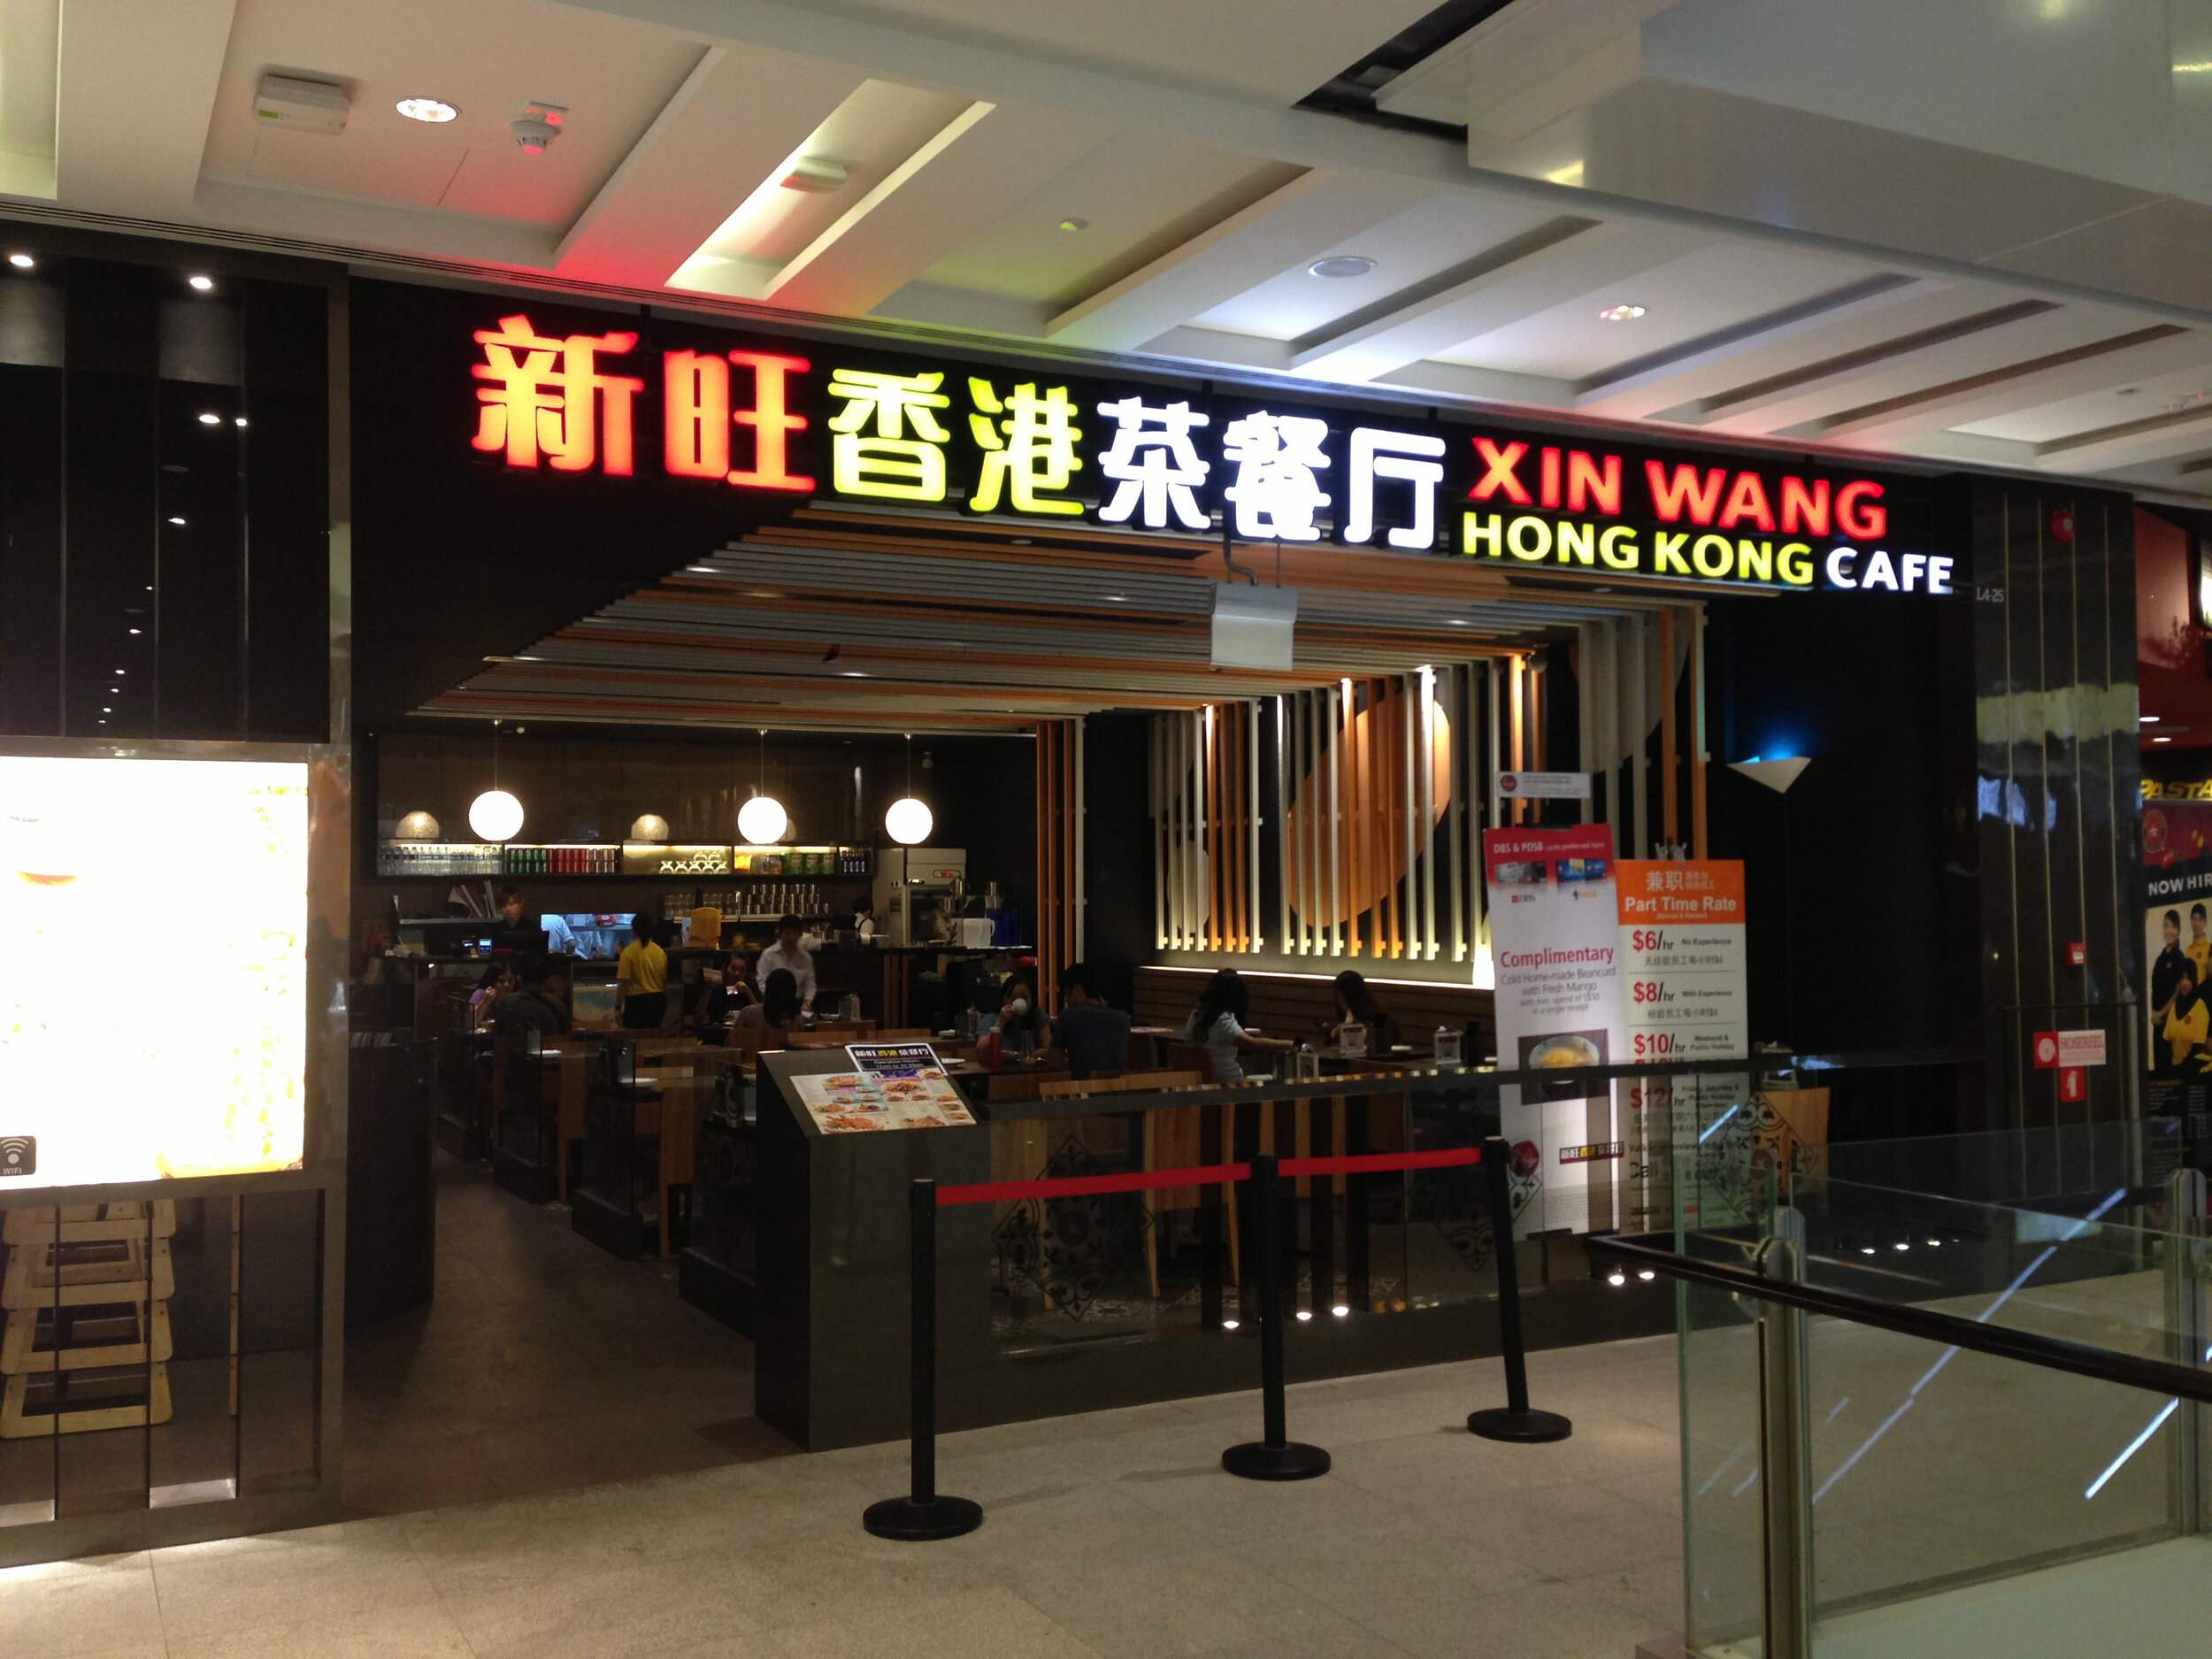 Xin Wang Hong Kong Cafe courtesy Hungrygowhere